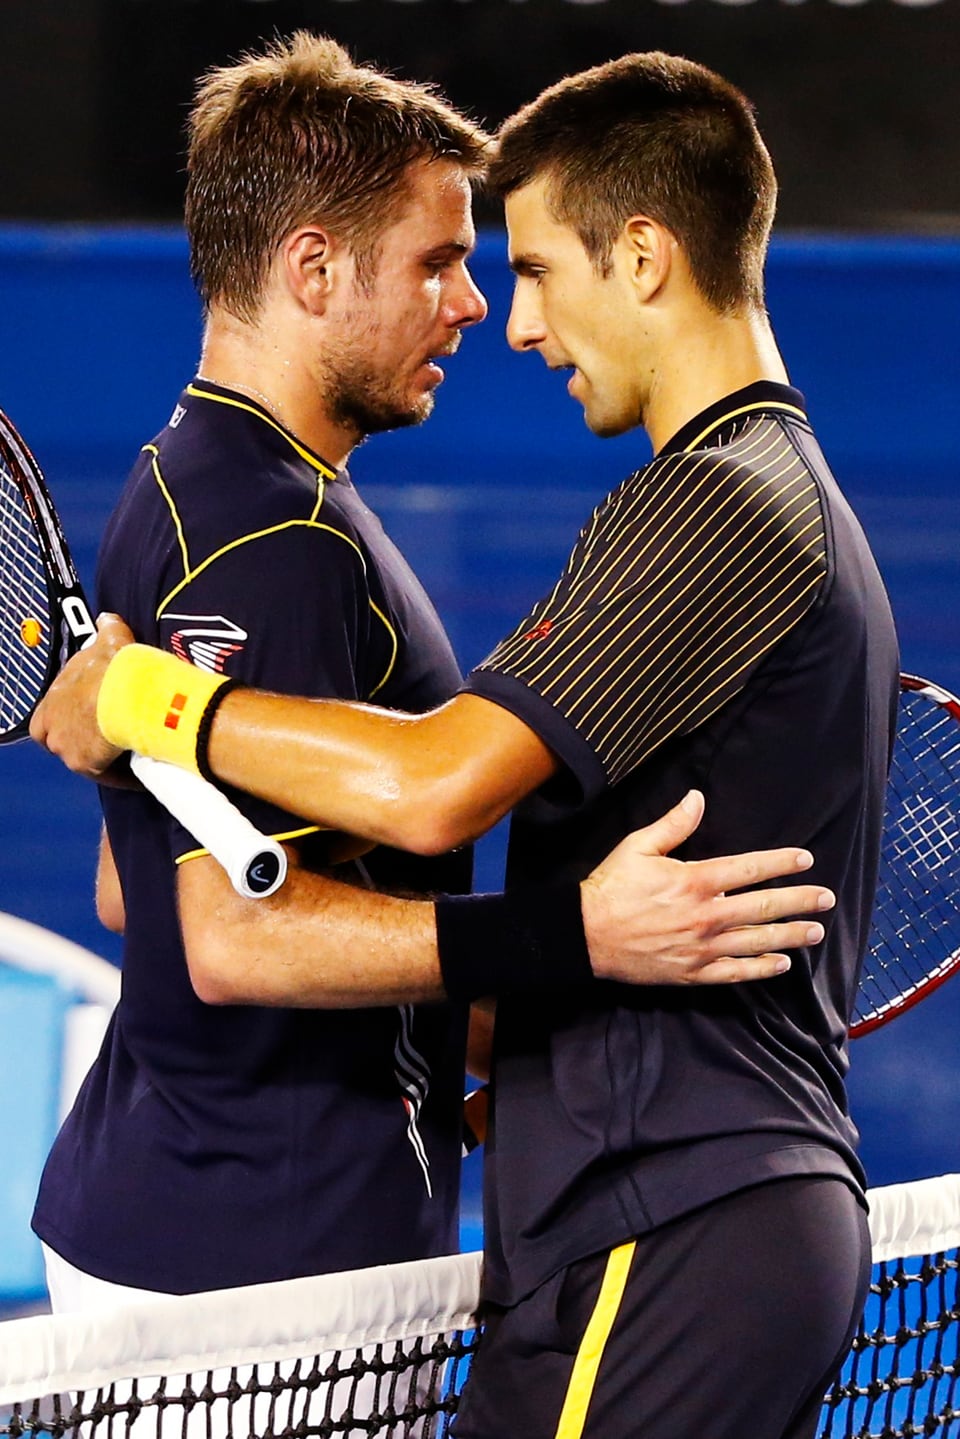 Sieger Novak Djokovic gratuliert nach Spielende dem unterlegenen Stanislas Wawrinka.